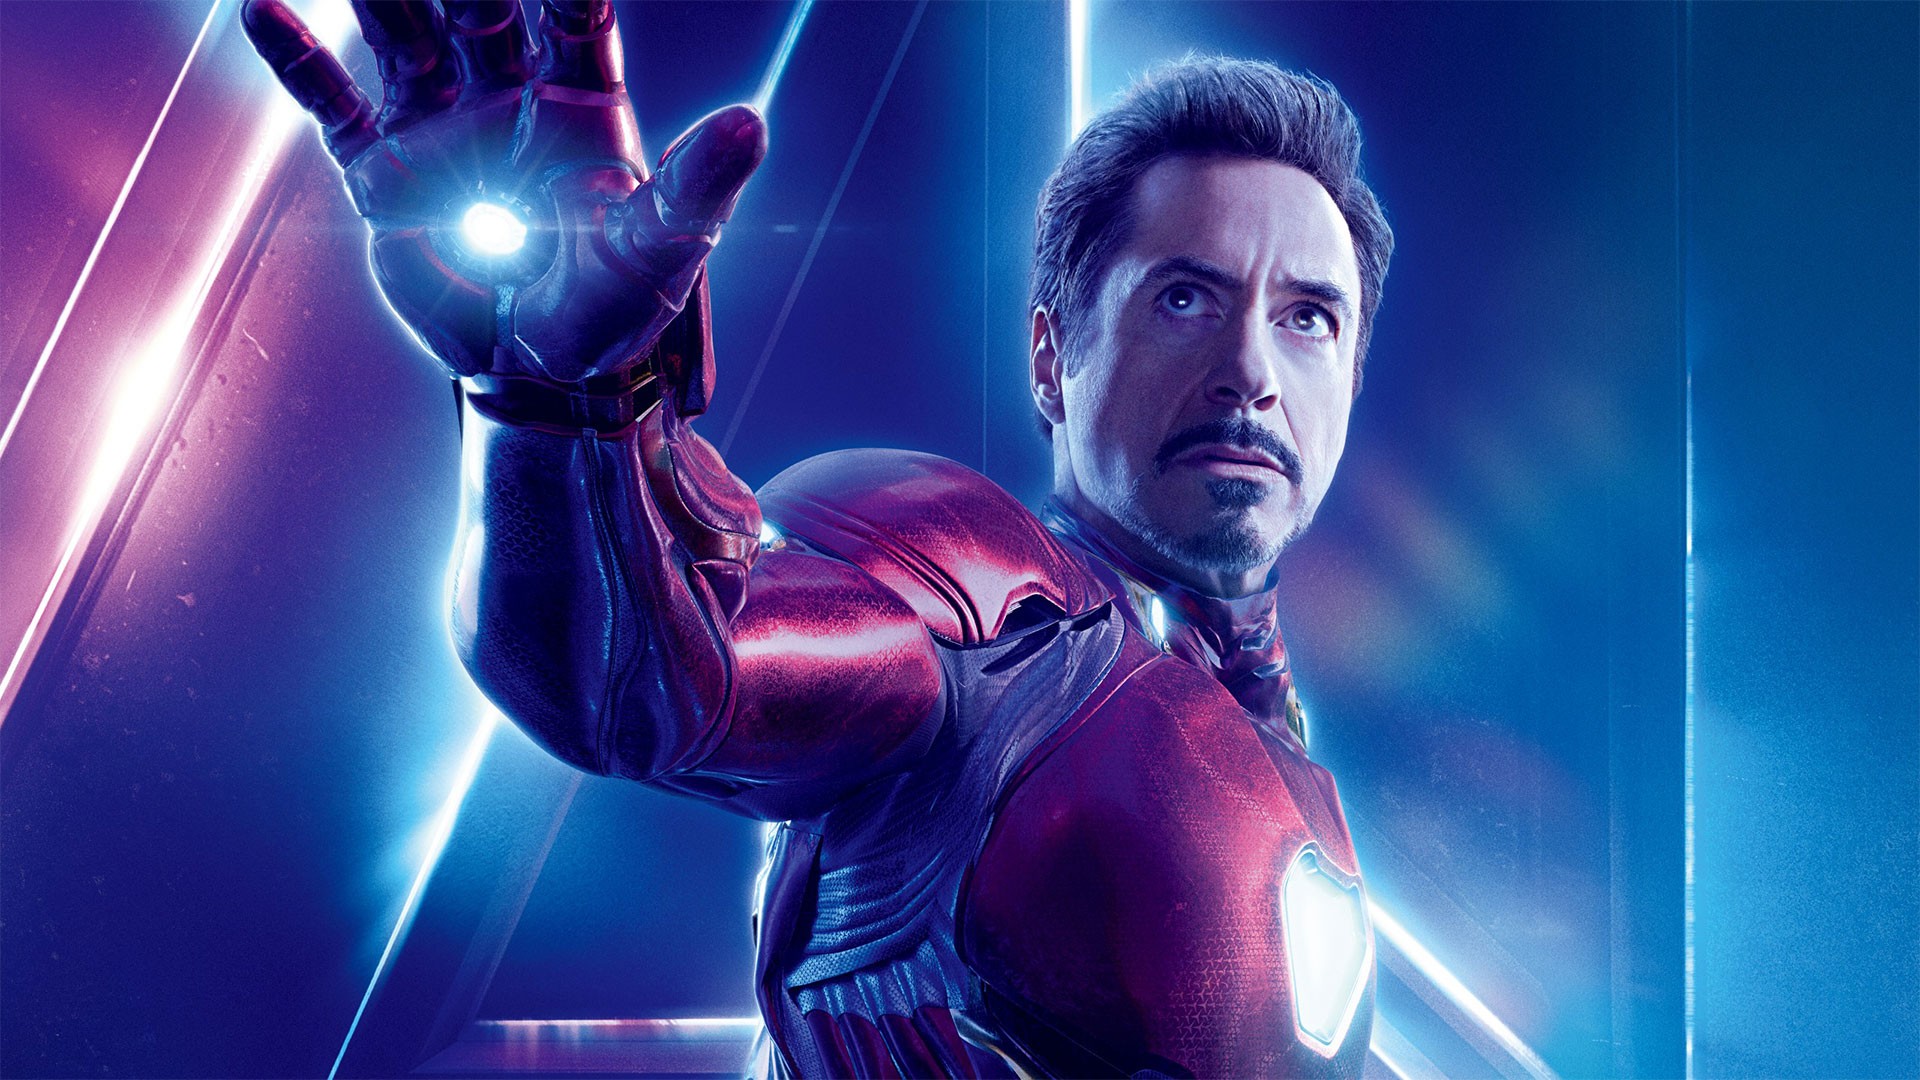 Iron Man Avengers Endgame Wallpaper HD 2019 Movie Poster